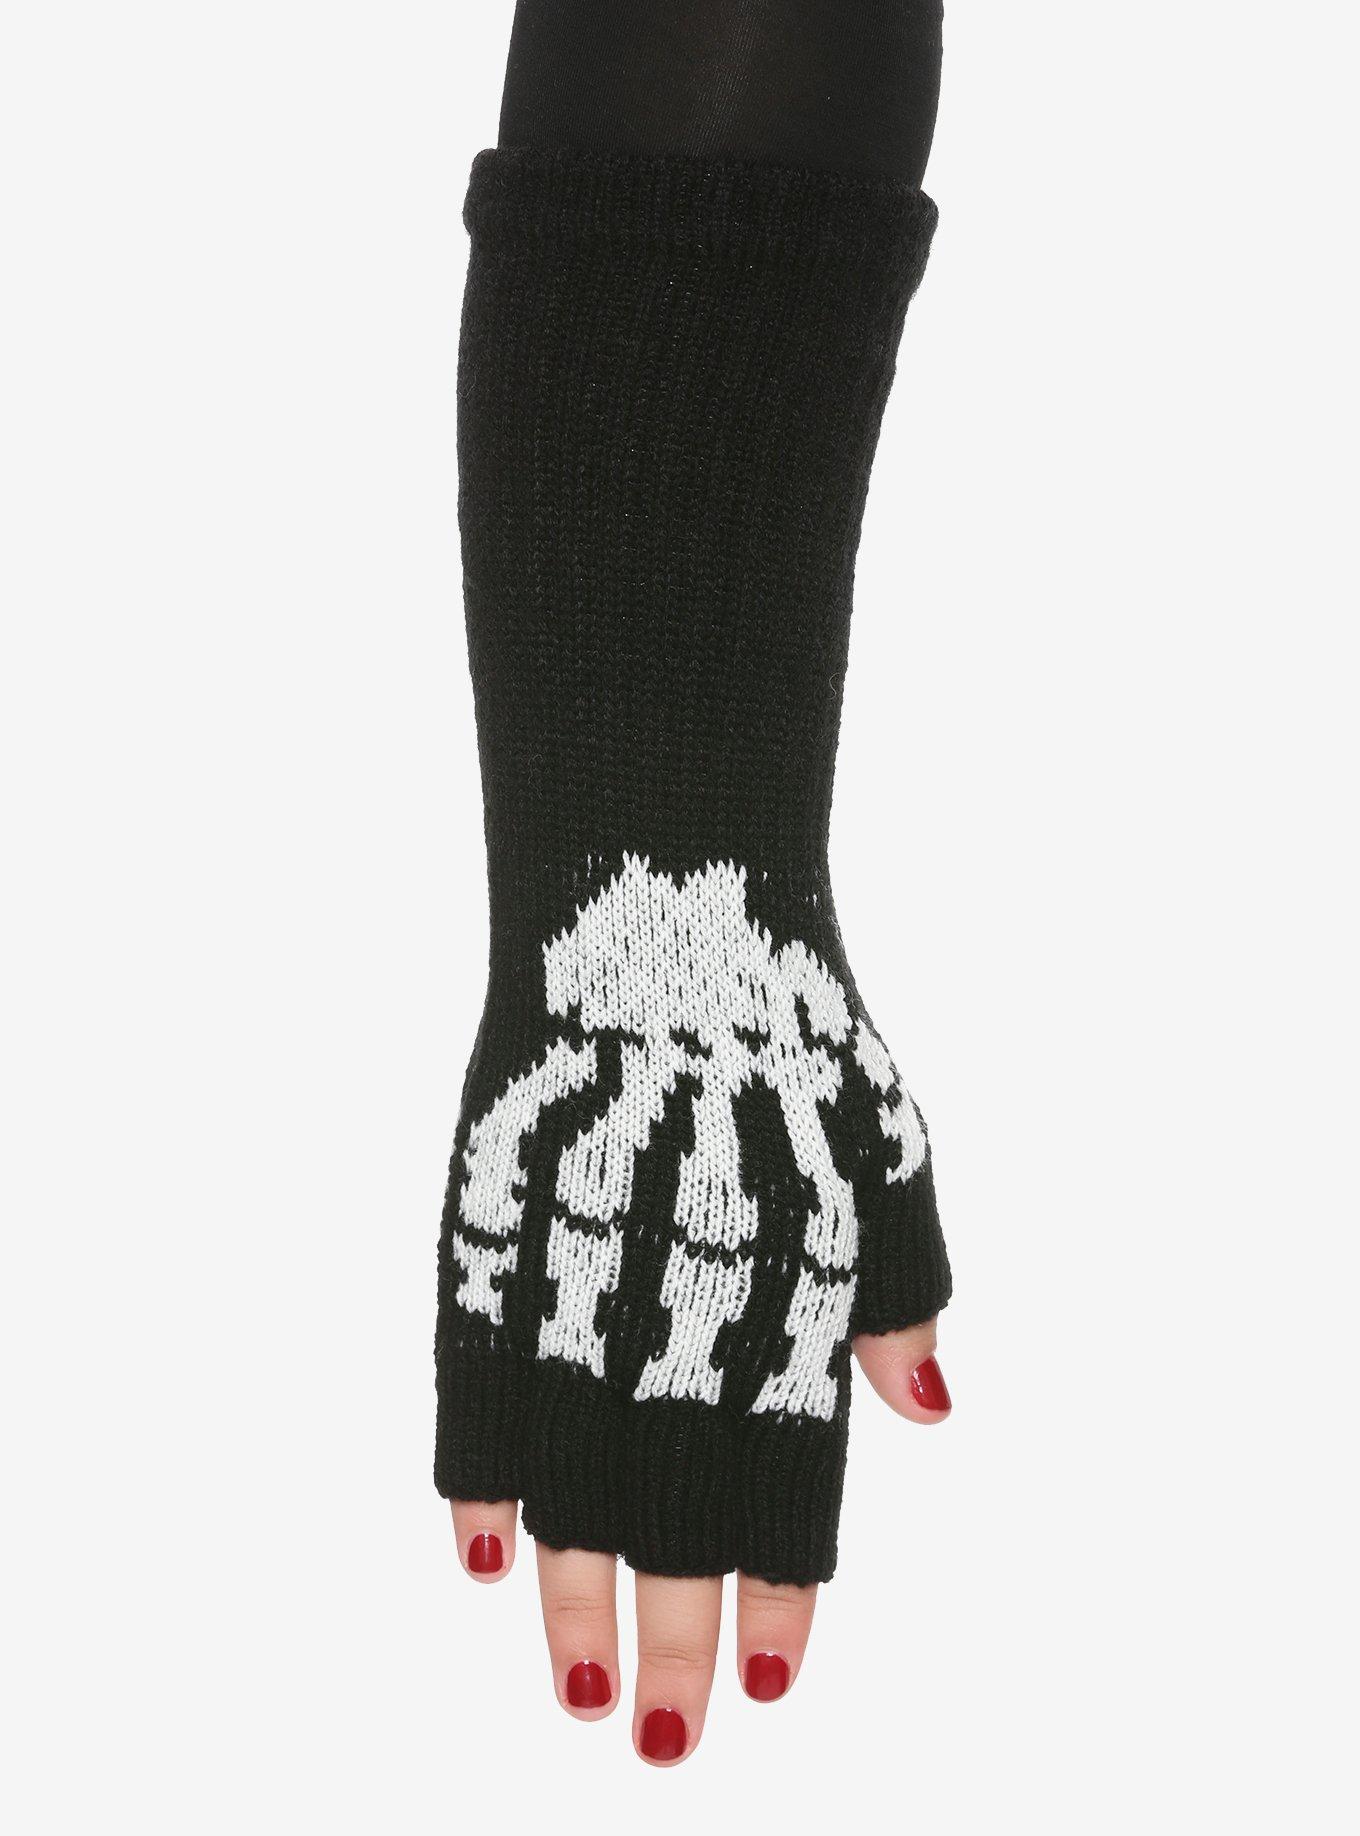 Black Cuff Skeleton Fingerless Gloves, , hi-res